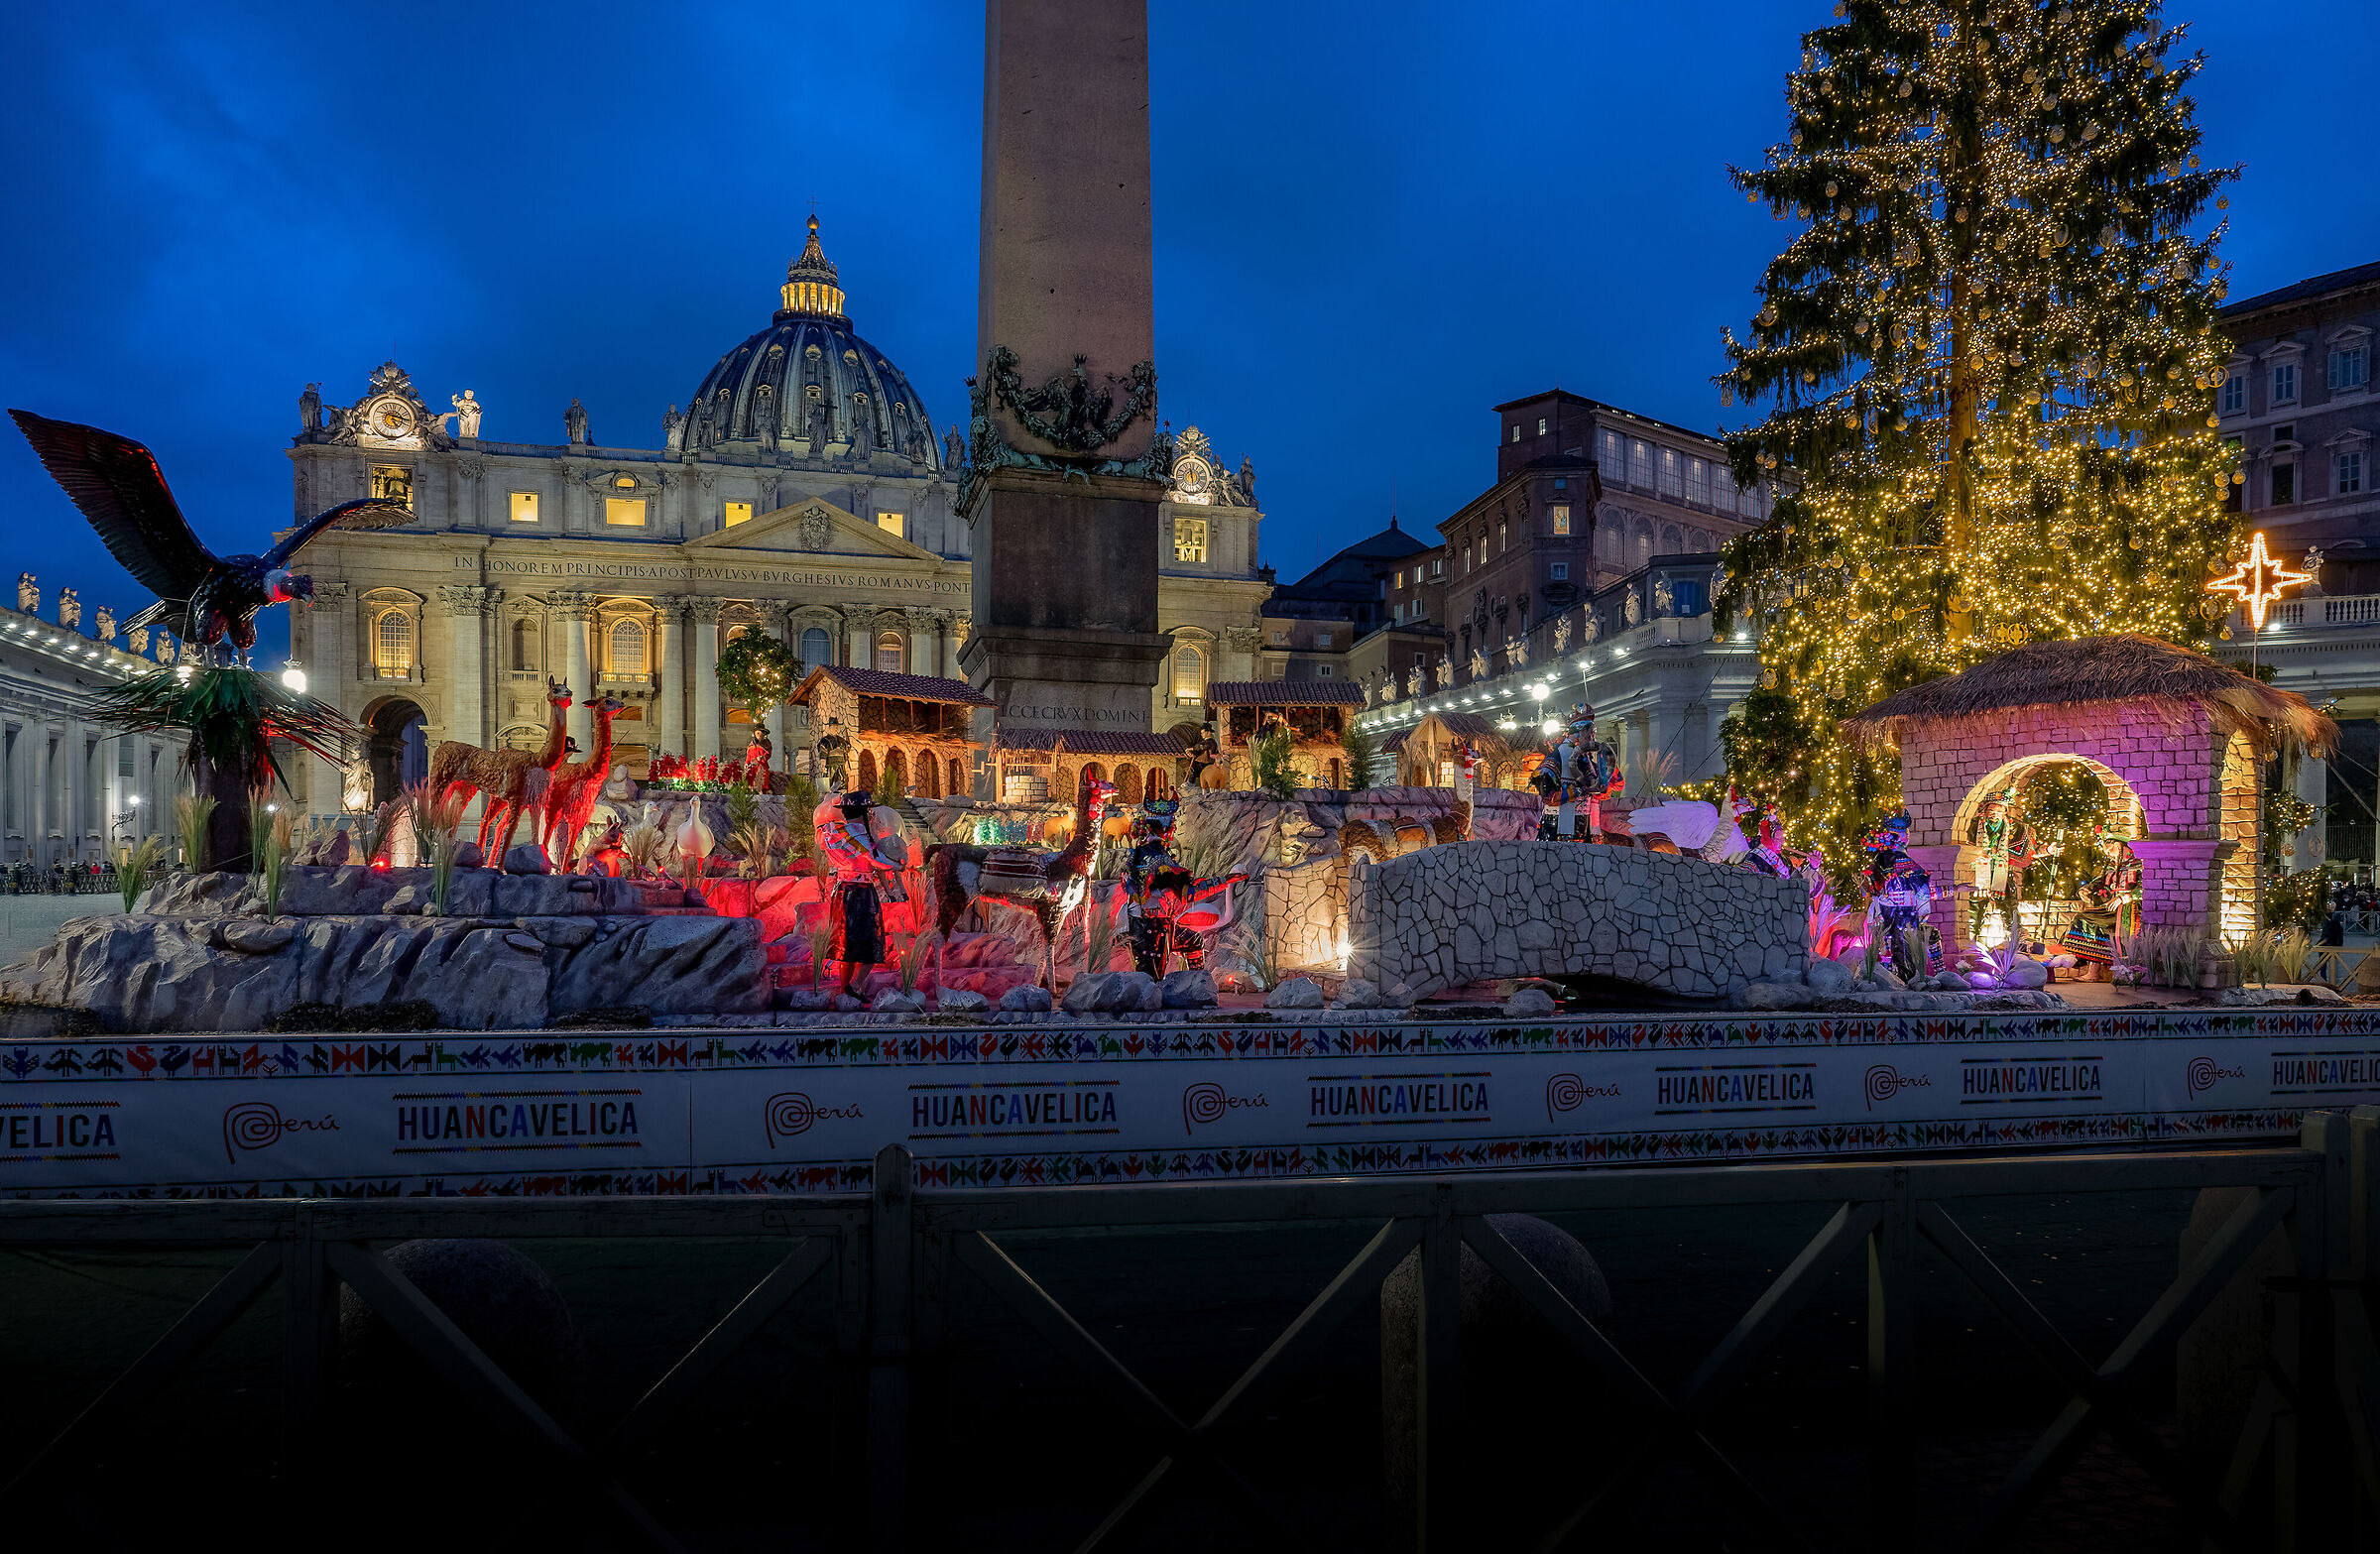 The Nativity scene in St. Peter's Square...